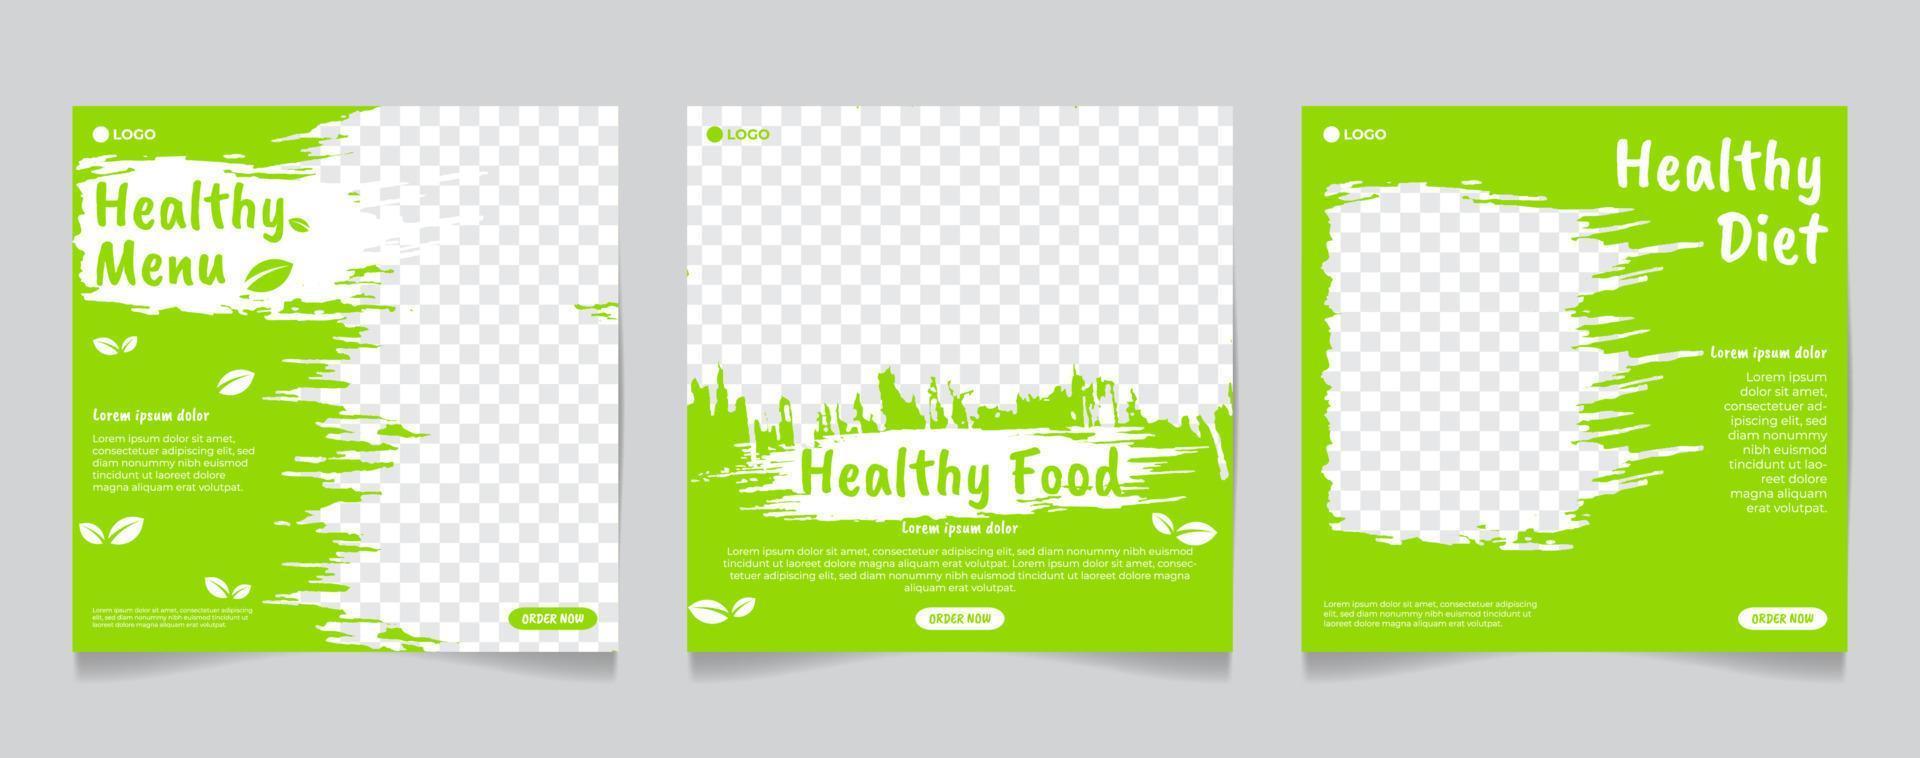 Social media template healthy food menu, green and white brush shape vector